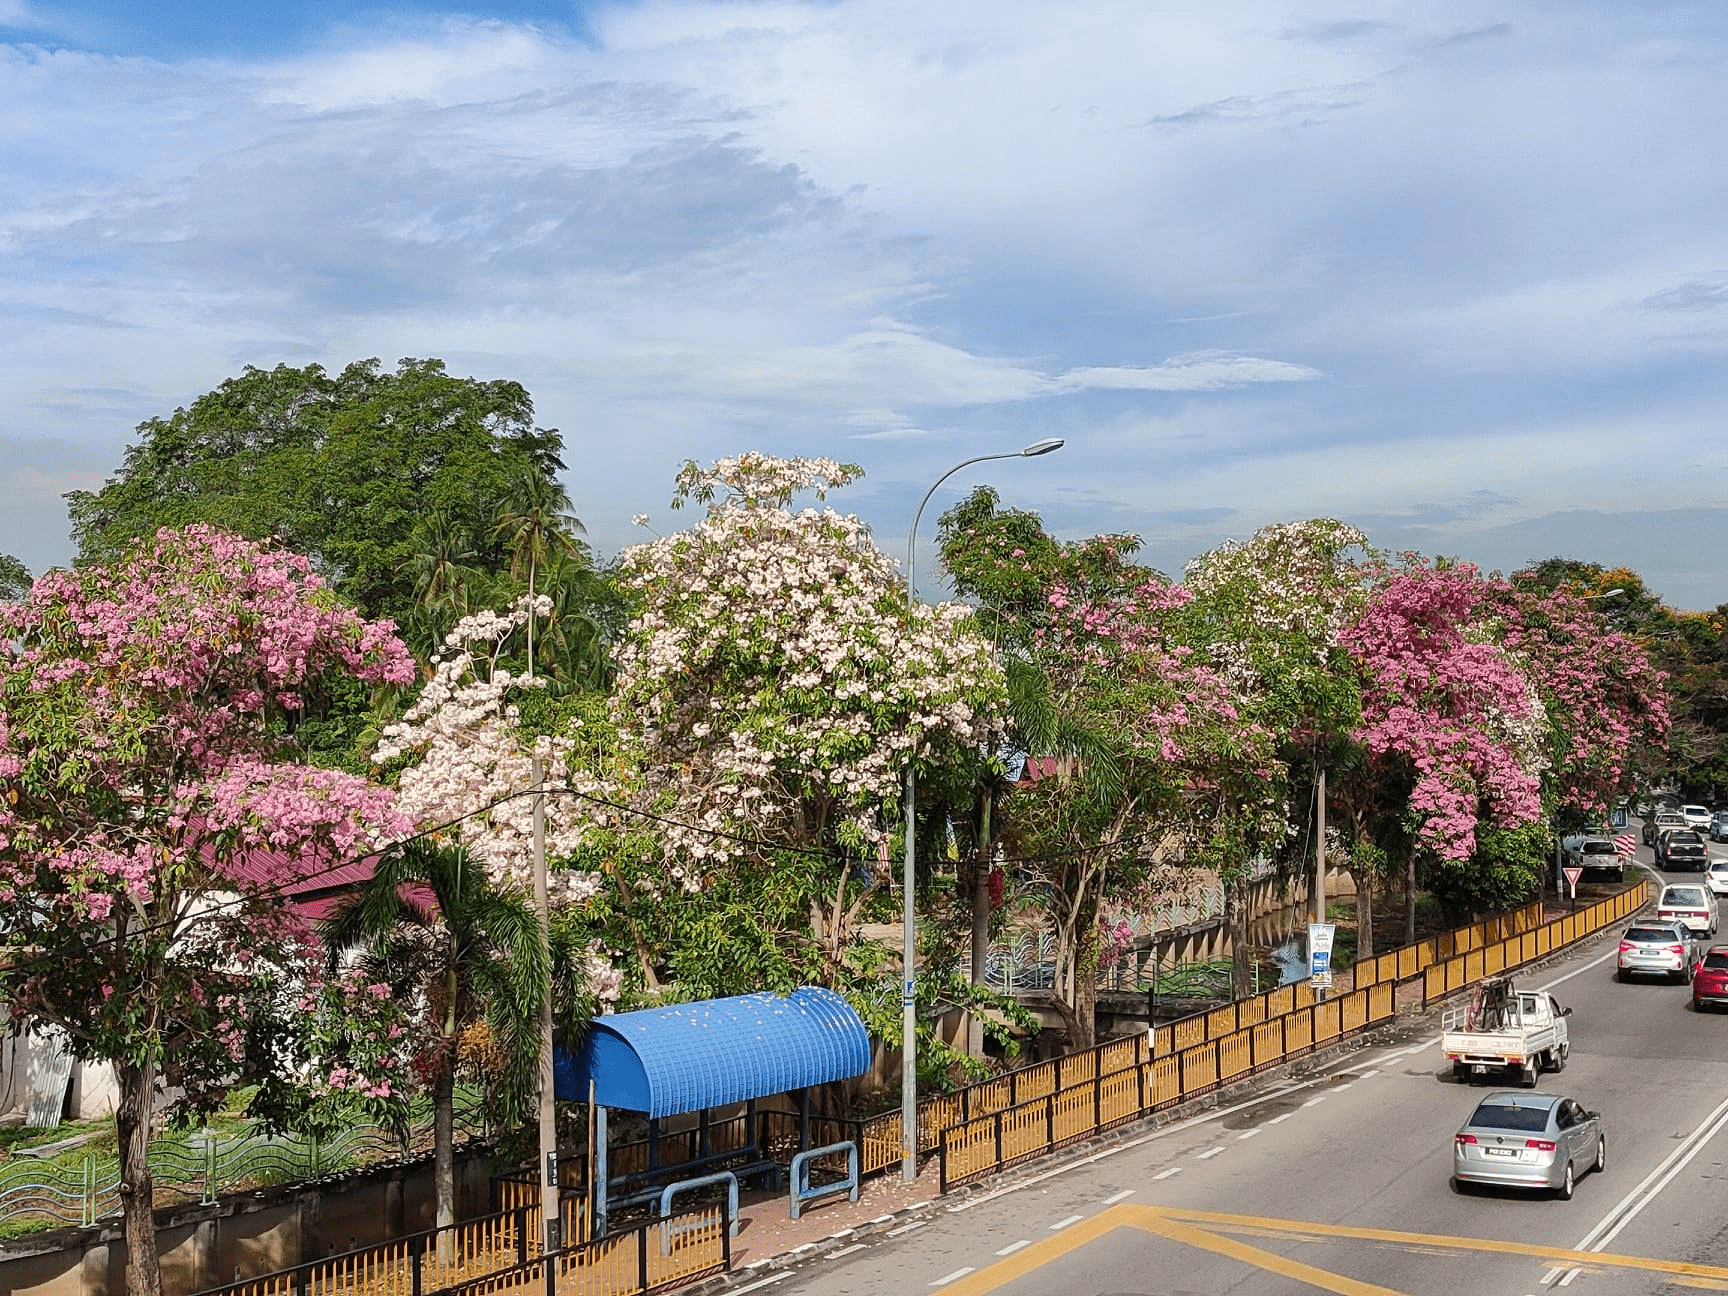 Tecome trees in full bloom in Malaysia - Penang